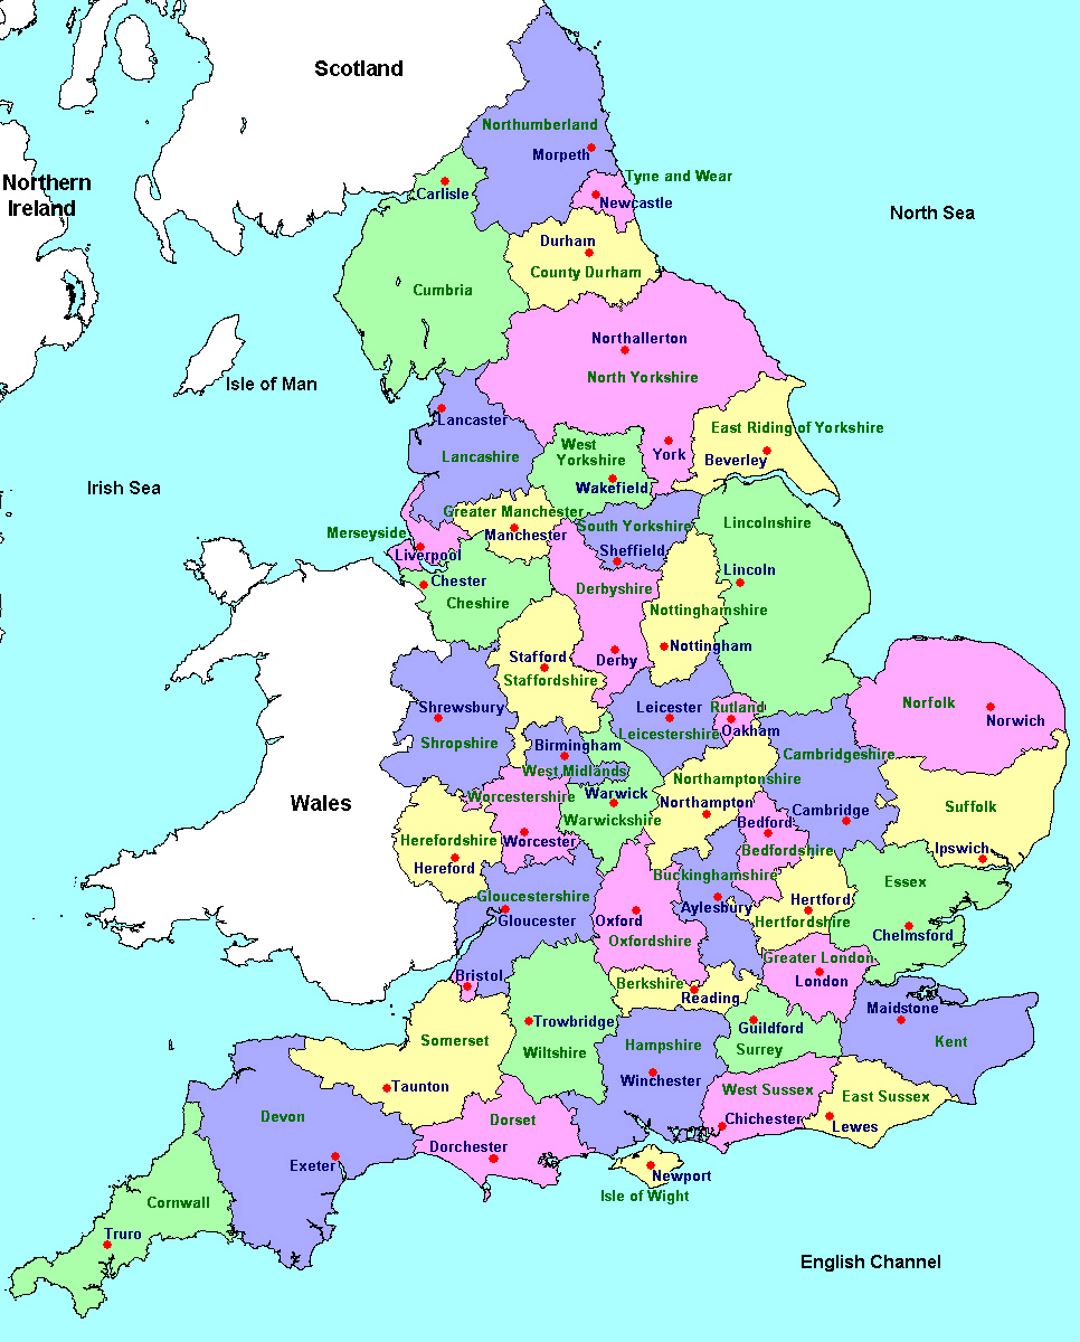 Detallado mapa administrativo de Inglaterra